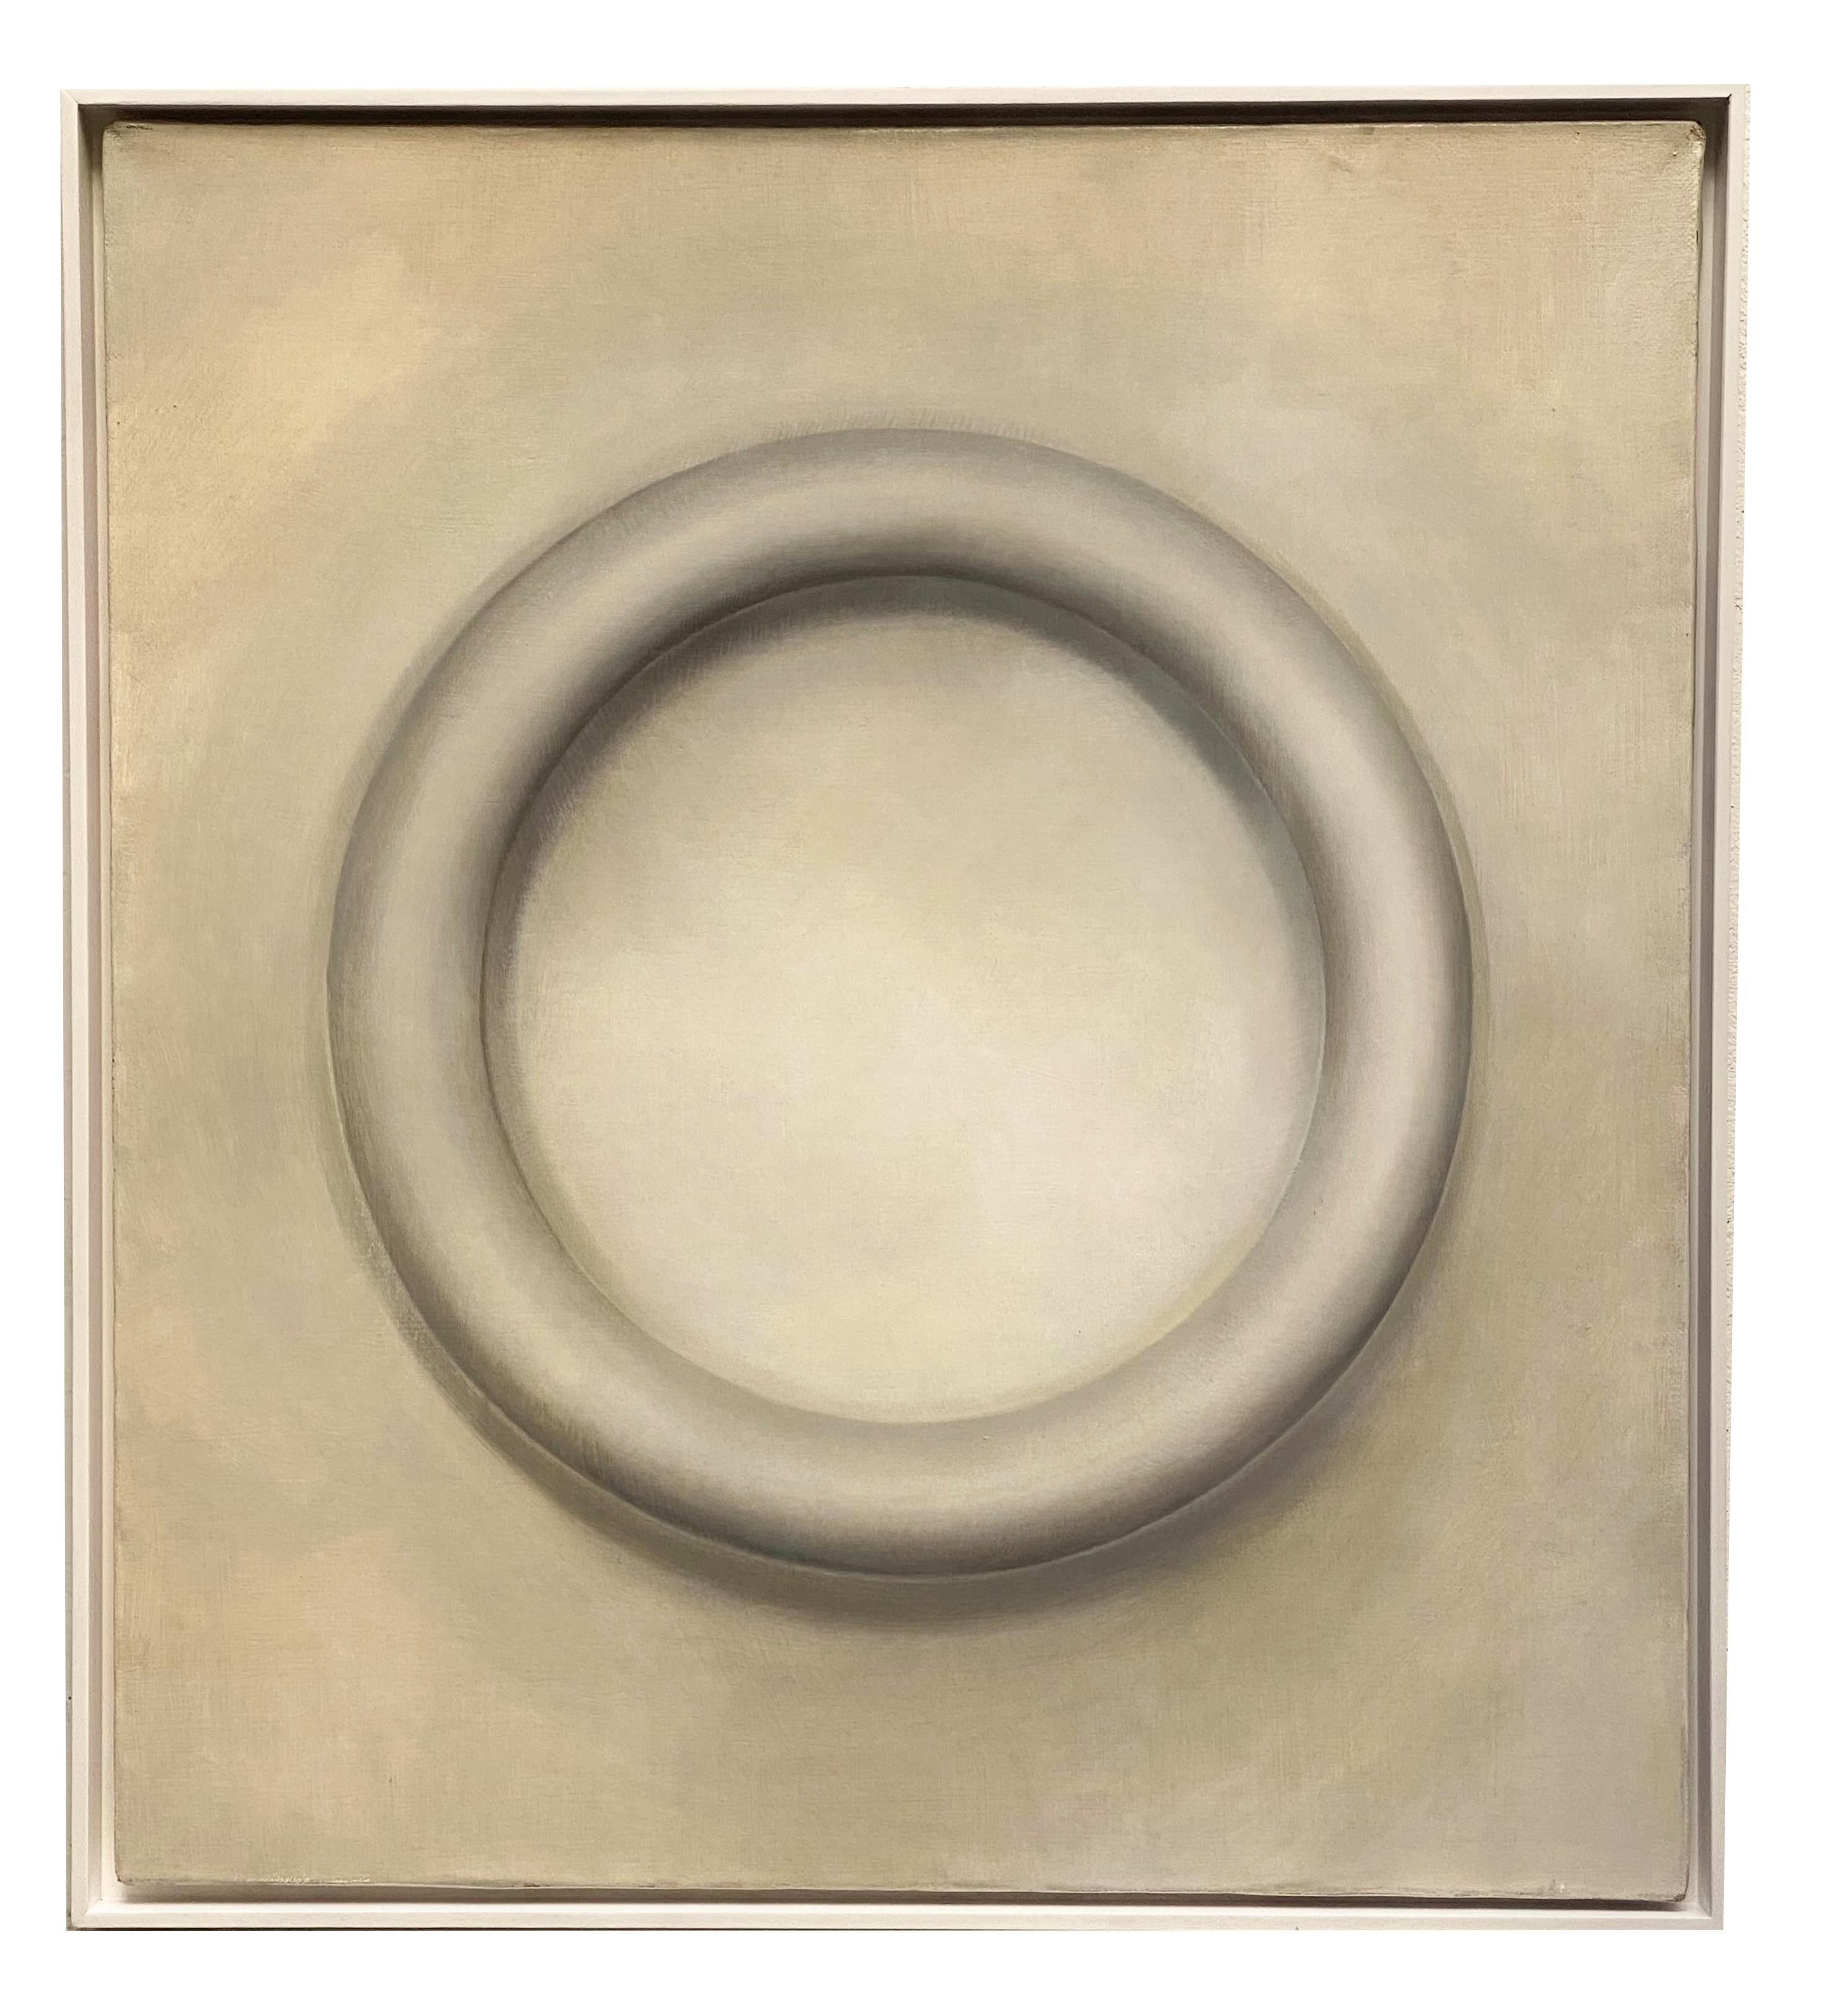 THE RING - Massimo Caiafa Oil on  Canvas, Italy.2021 2